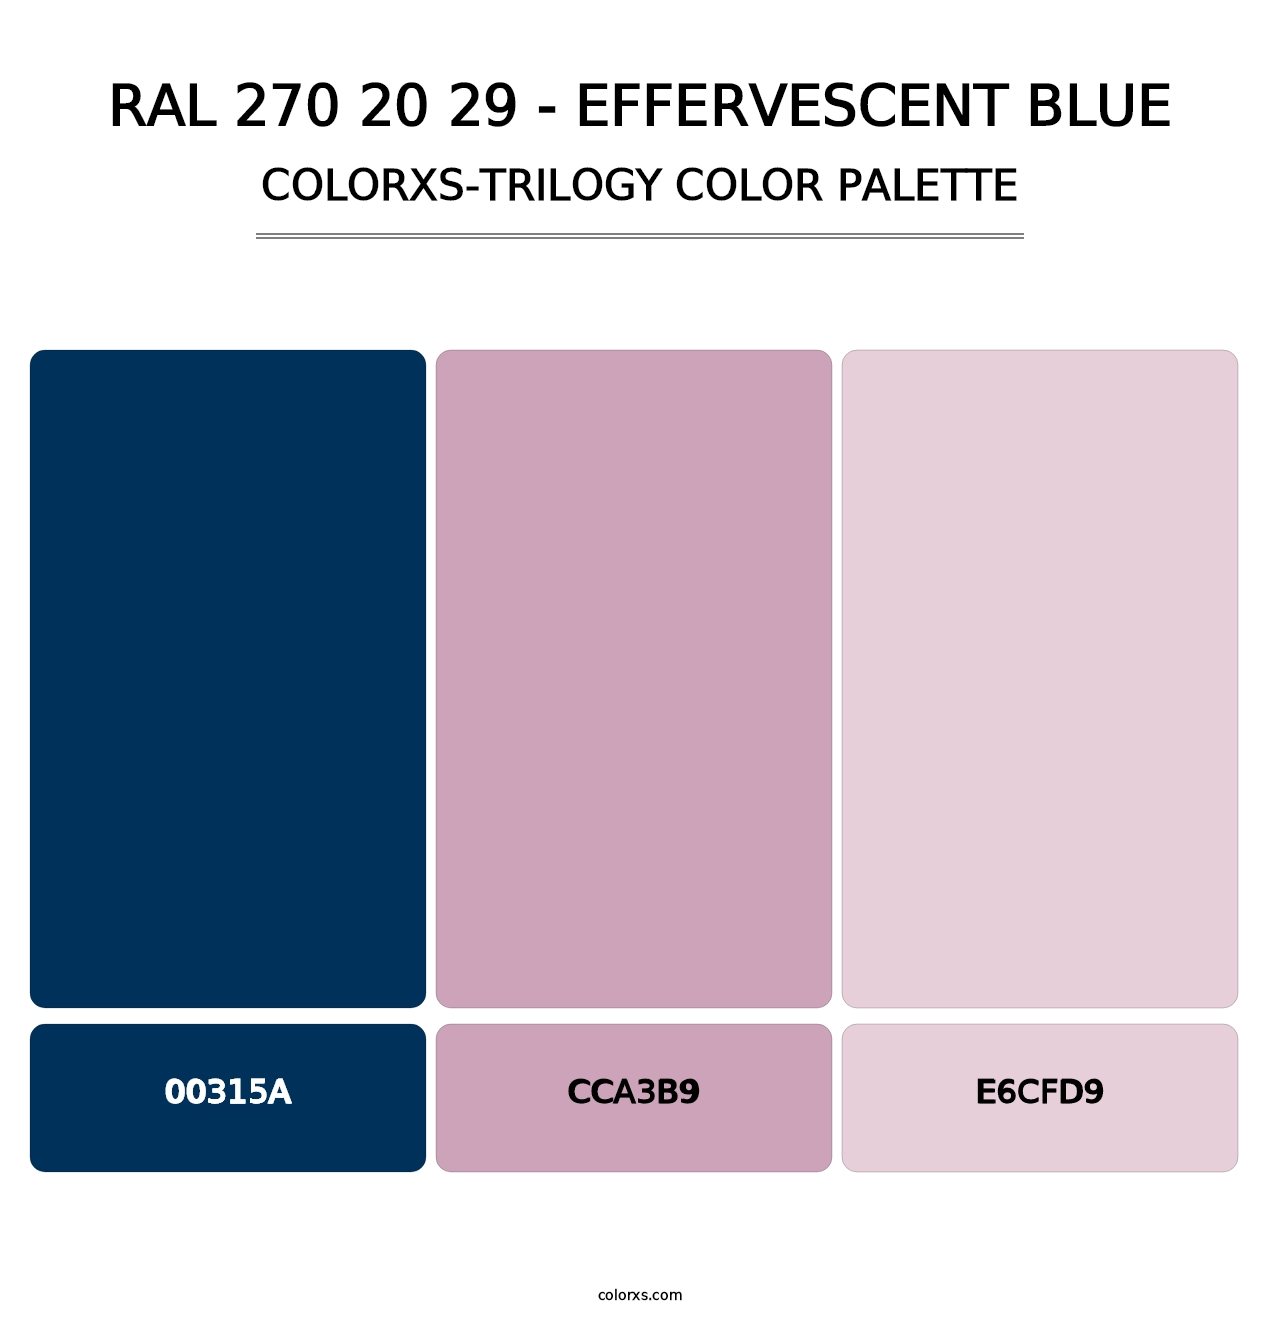 RAL 270 20 29 - Effervescent Blue - Colorxs Trilogy Palette